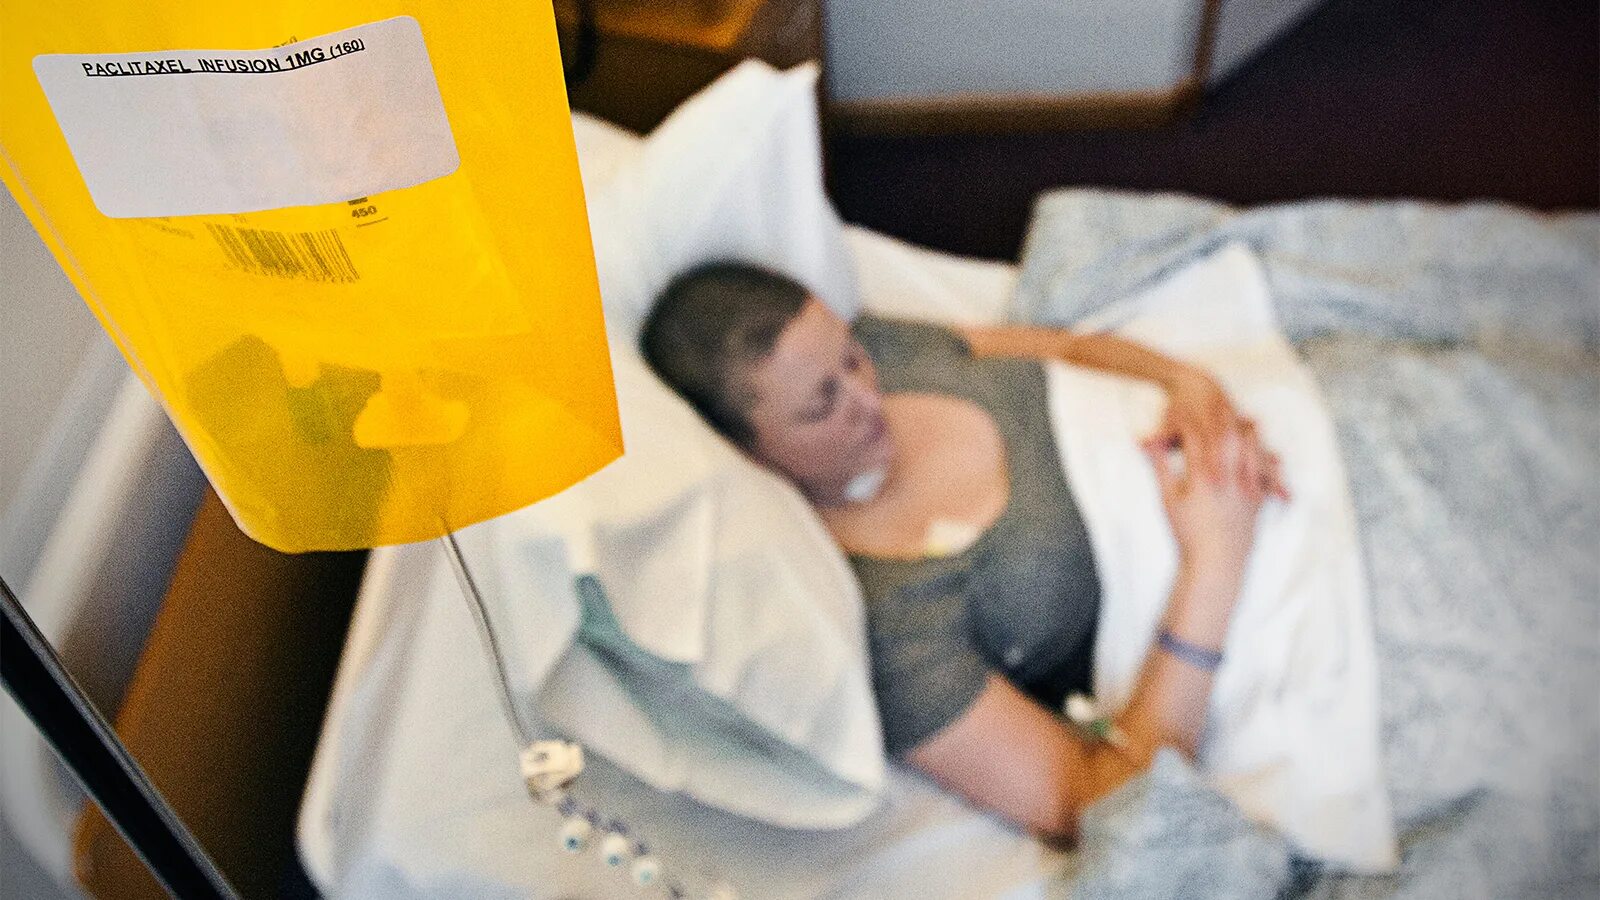 Химиотерапия умирают ли. Фото палат химиотерапии. Химиотерапия картинки для инстаграма.